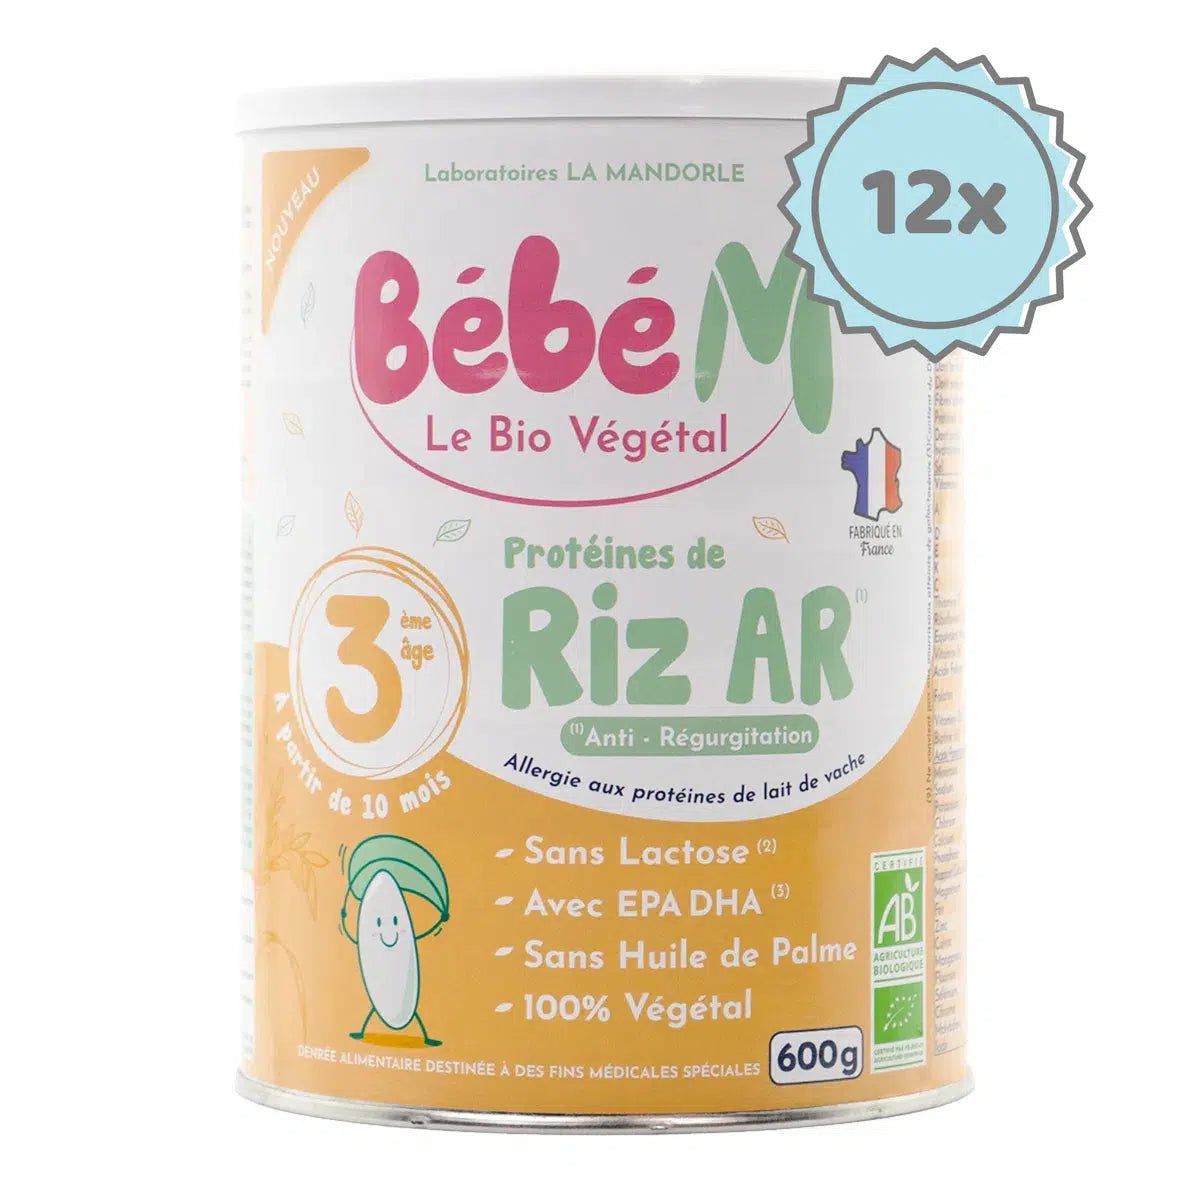 Bebe M (Bebe Mandorle) Organic Anti-Reflux Rice-Based Formula - Stage 3 (10+ months) | Organic Baby Formula | 6 cans